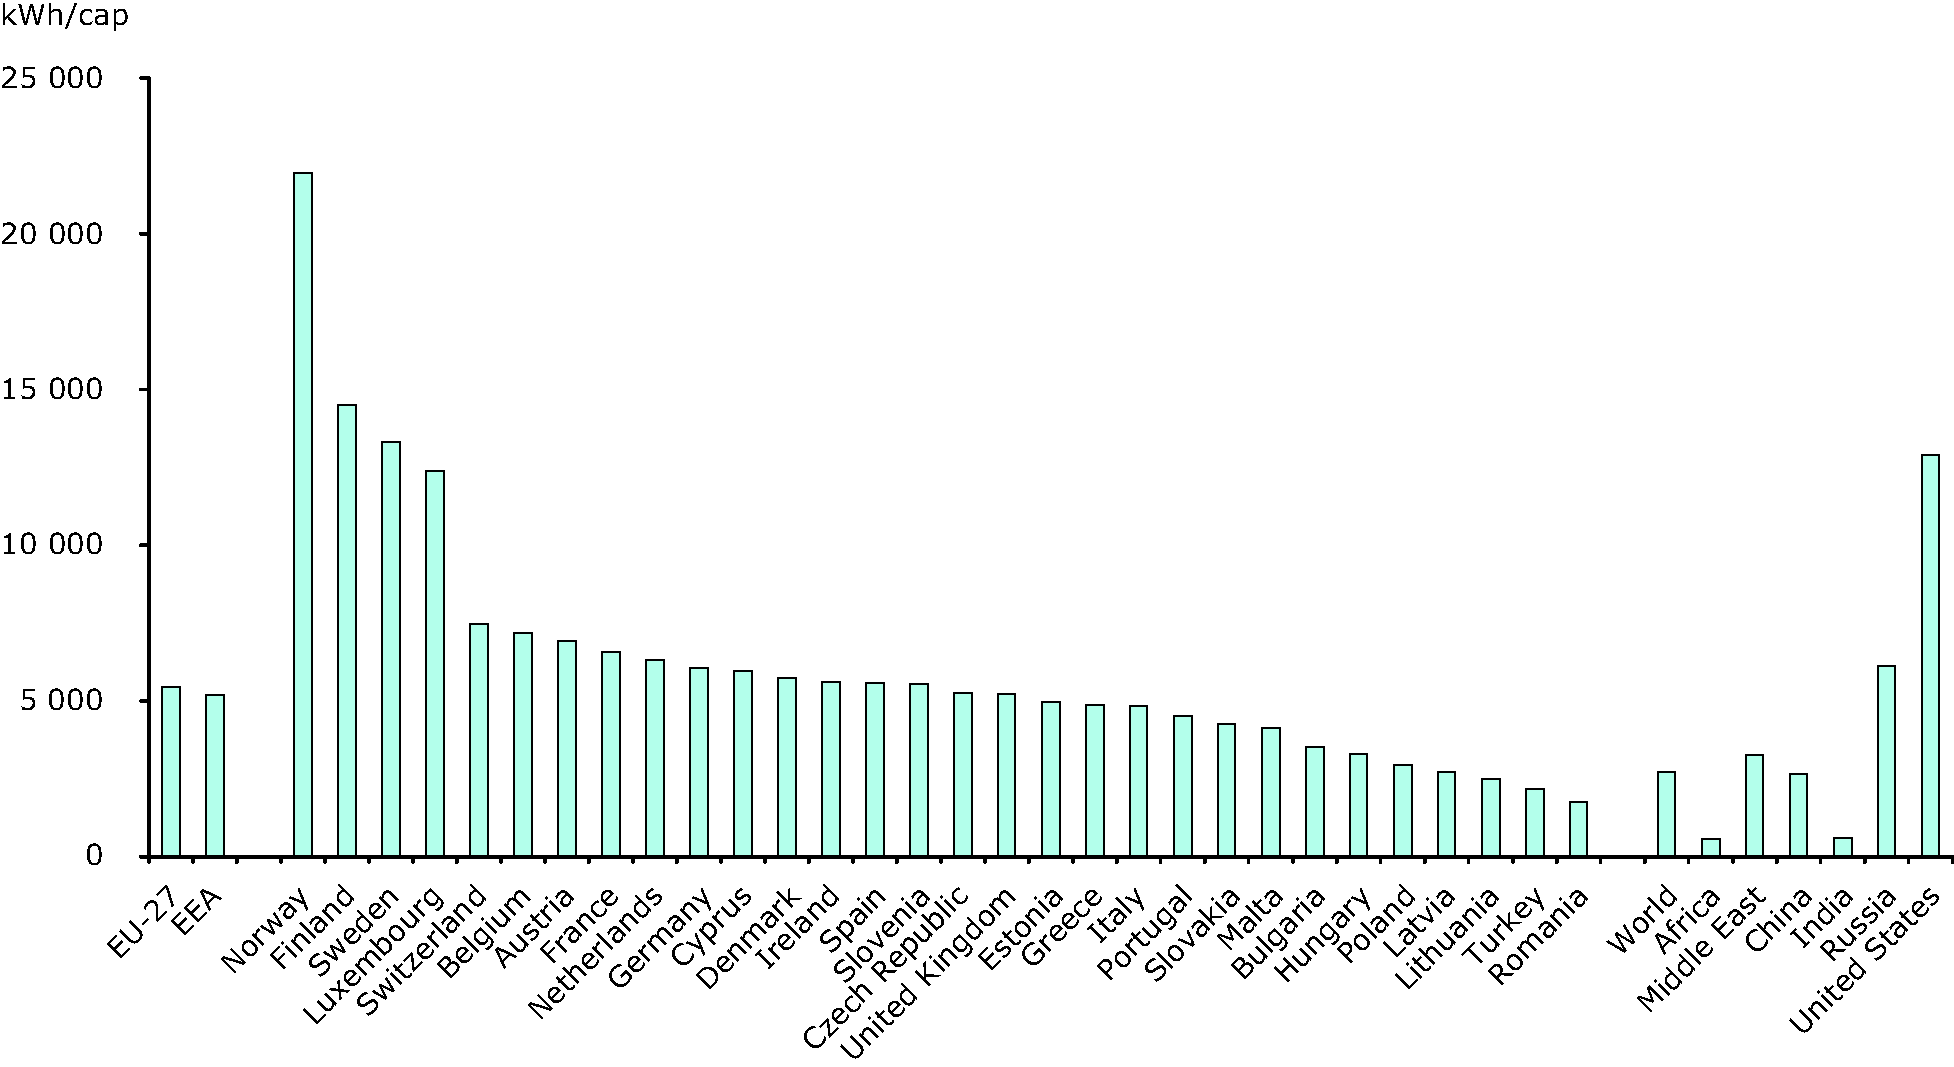 Electricity consumption per capita (in kWh/cap) in 2009